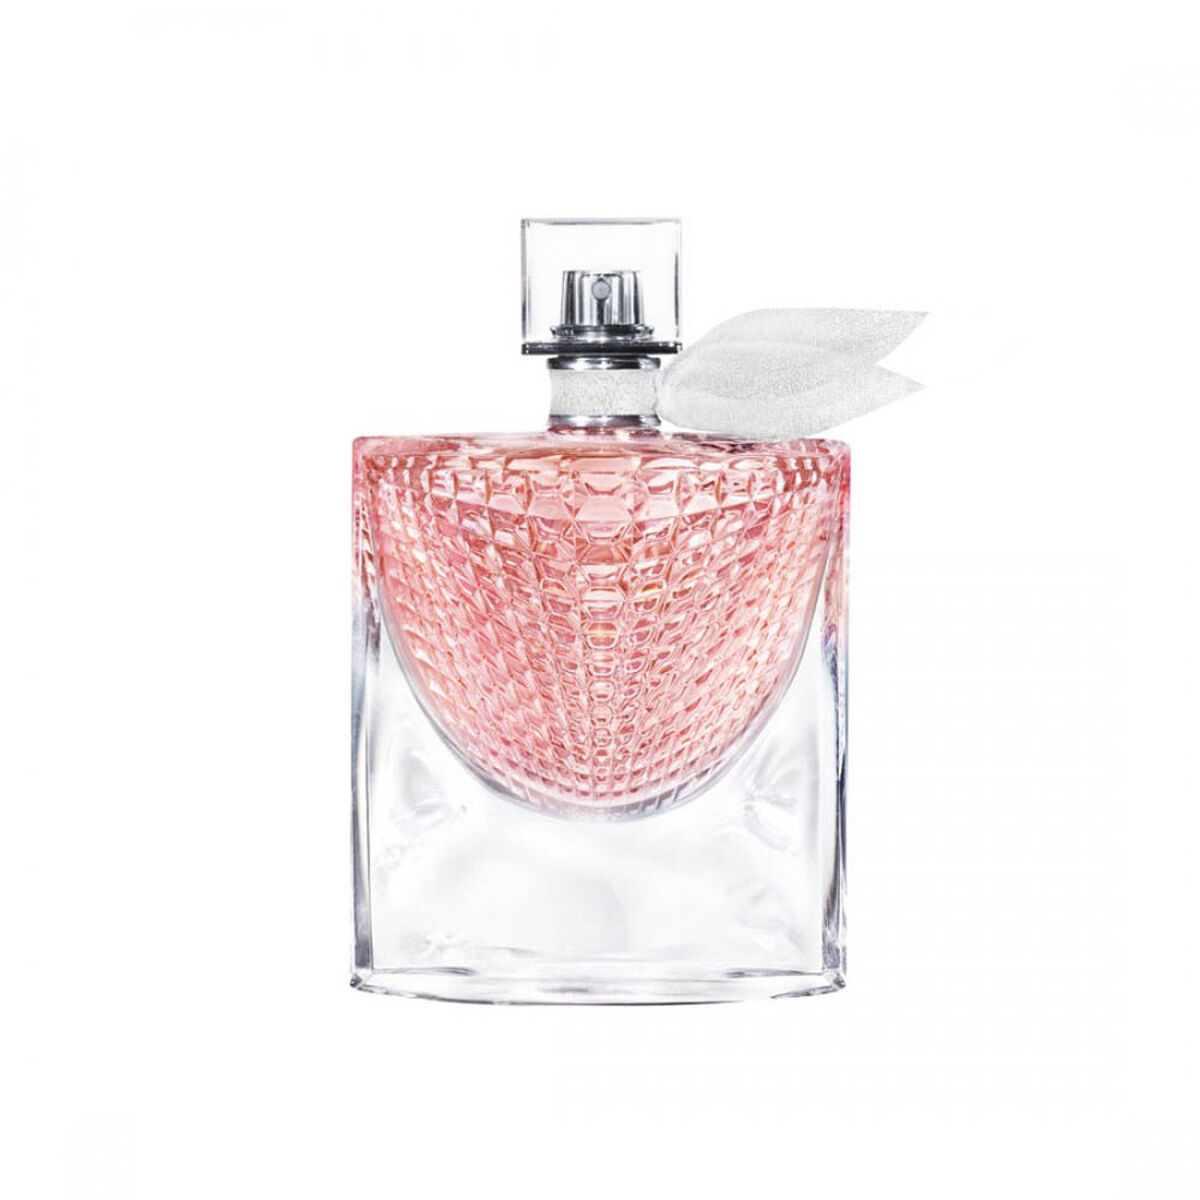 Perfume Lancome LVEB L'Éclat EDP 30 ml